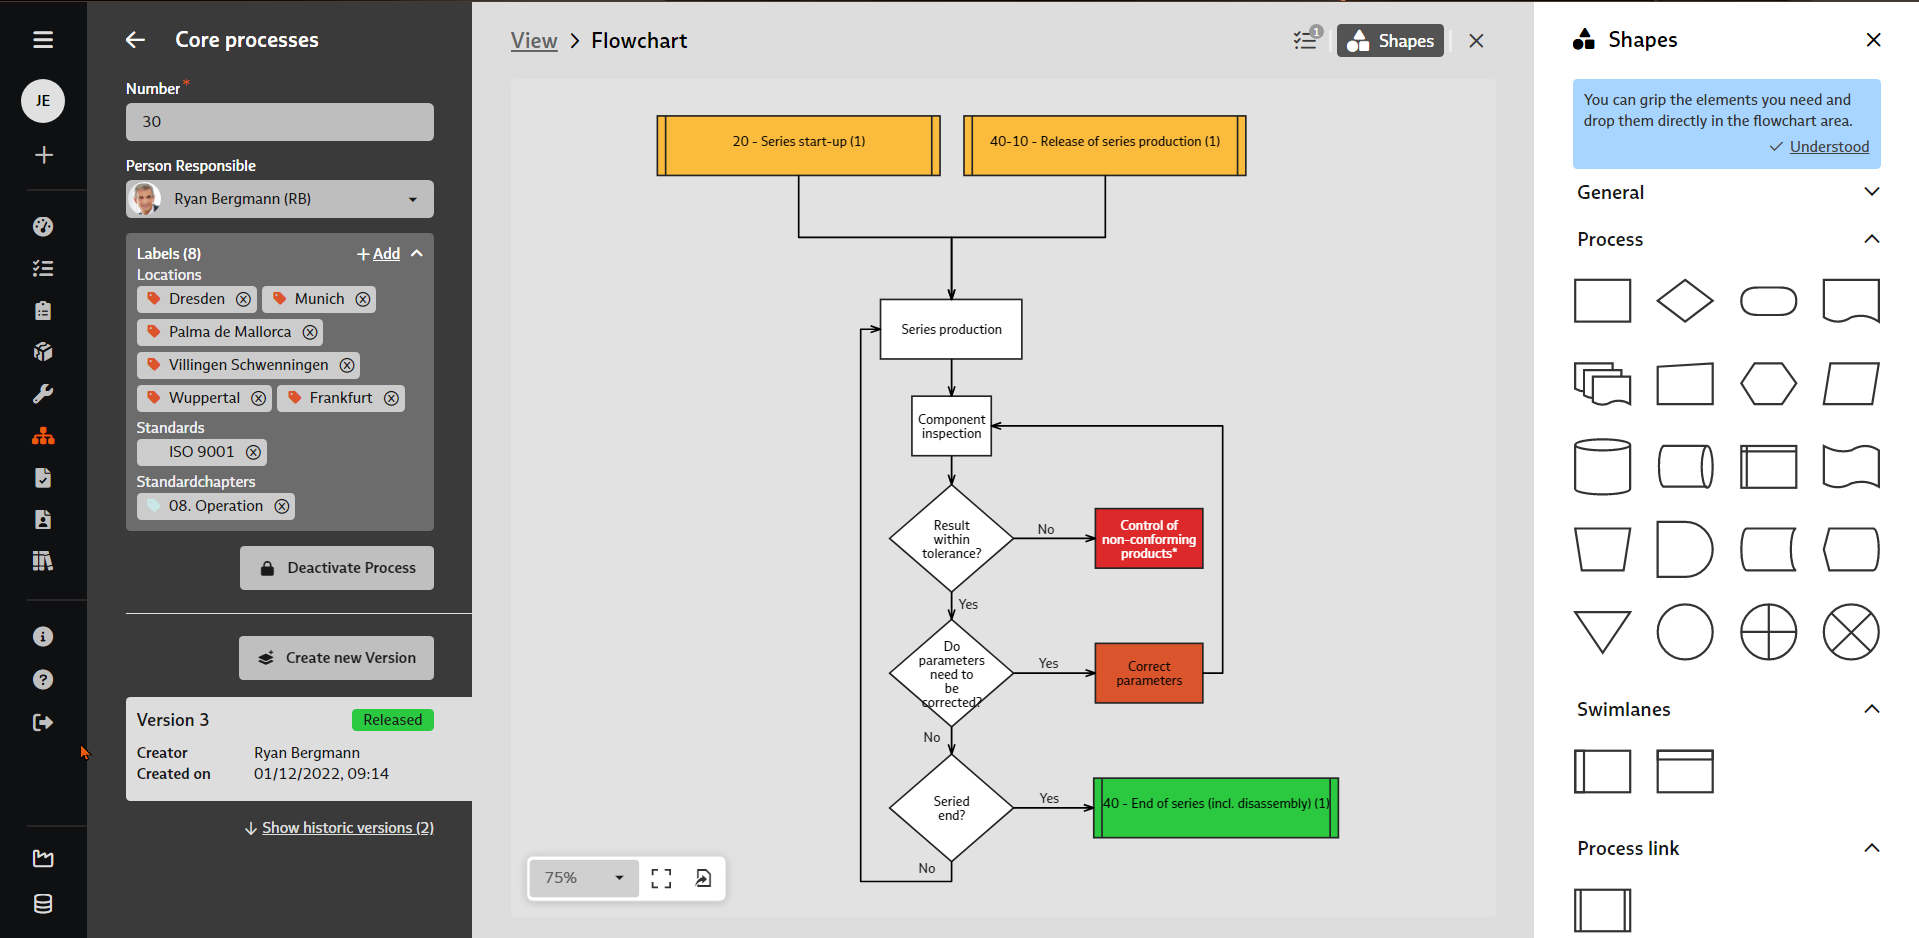 Process management in the QM software BabtecQ: Flowchart